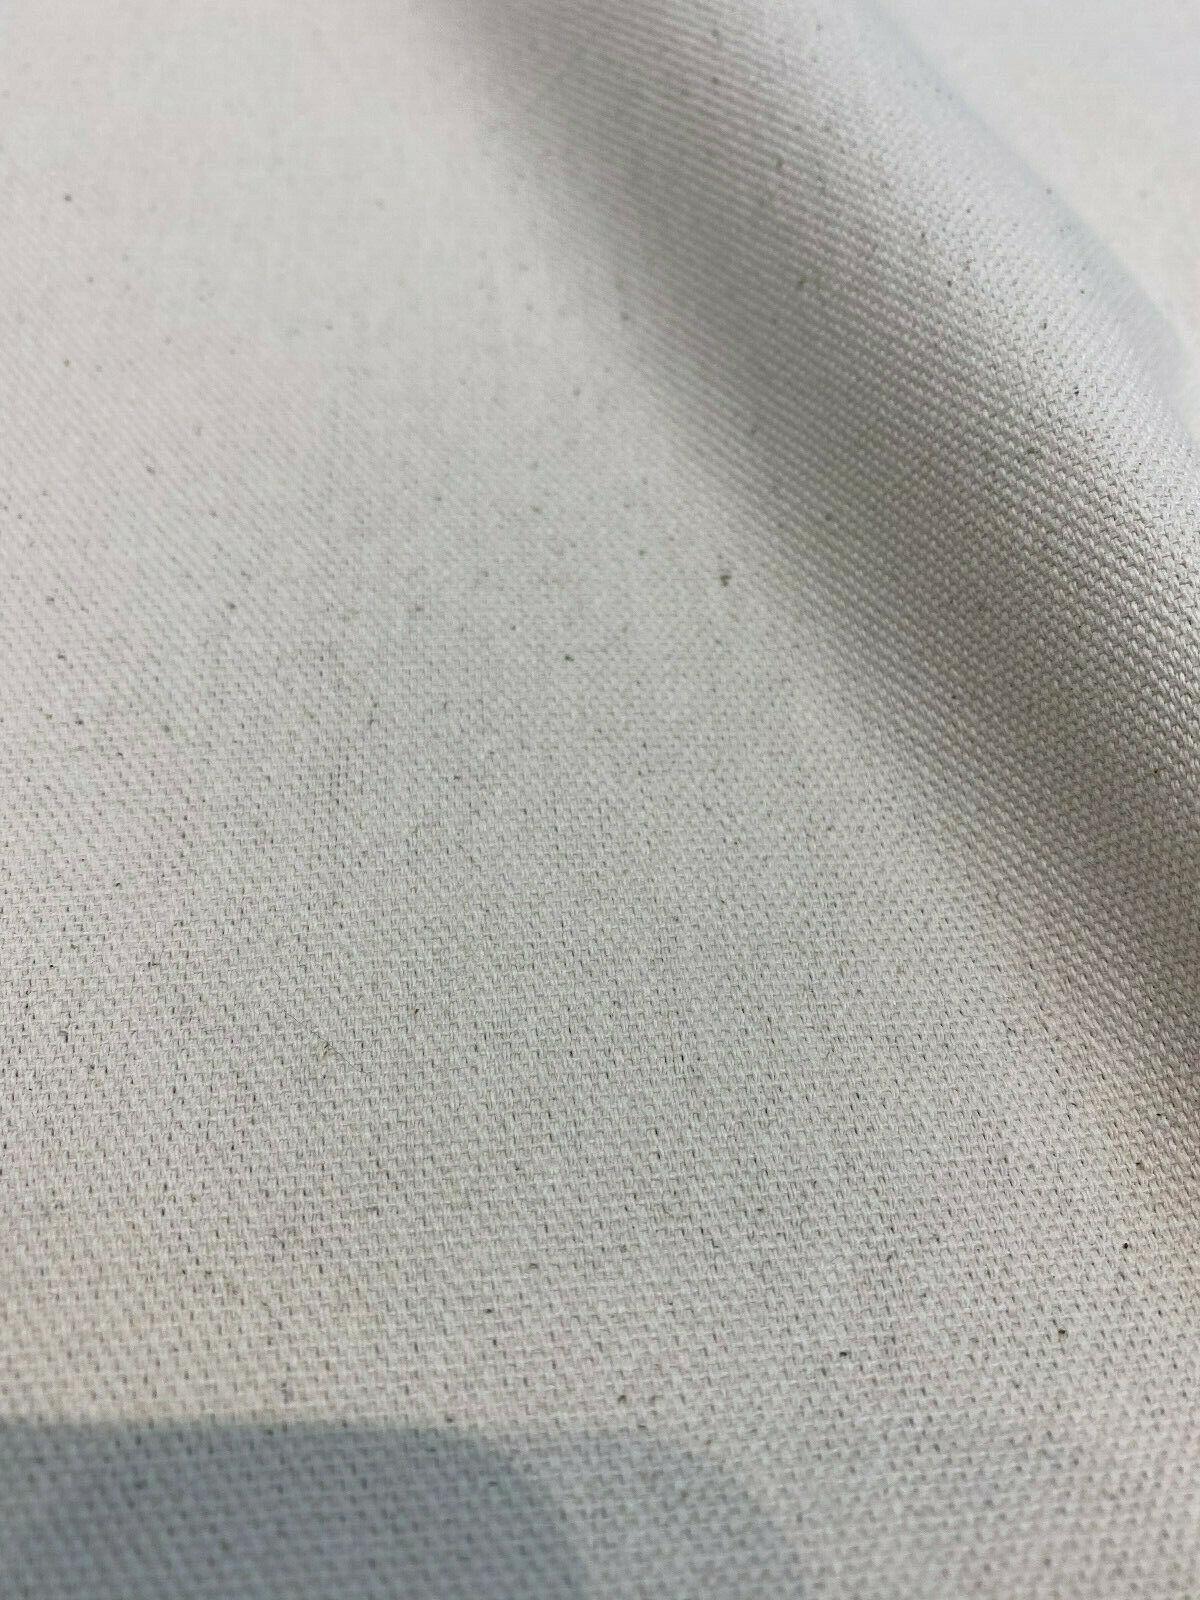 10 Oz White Cotton Canvas Fabric